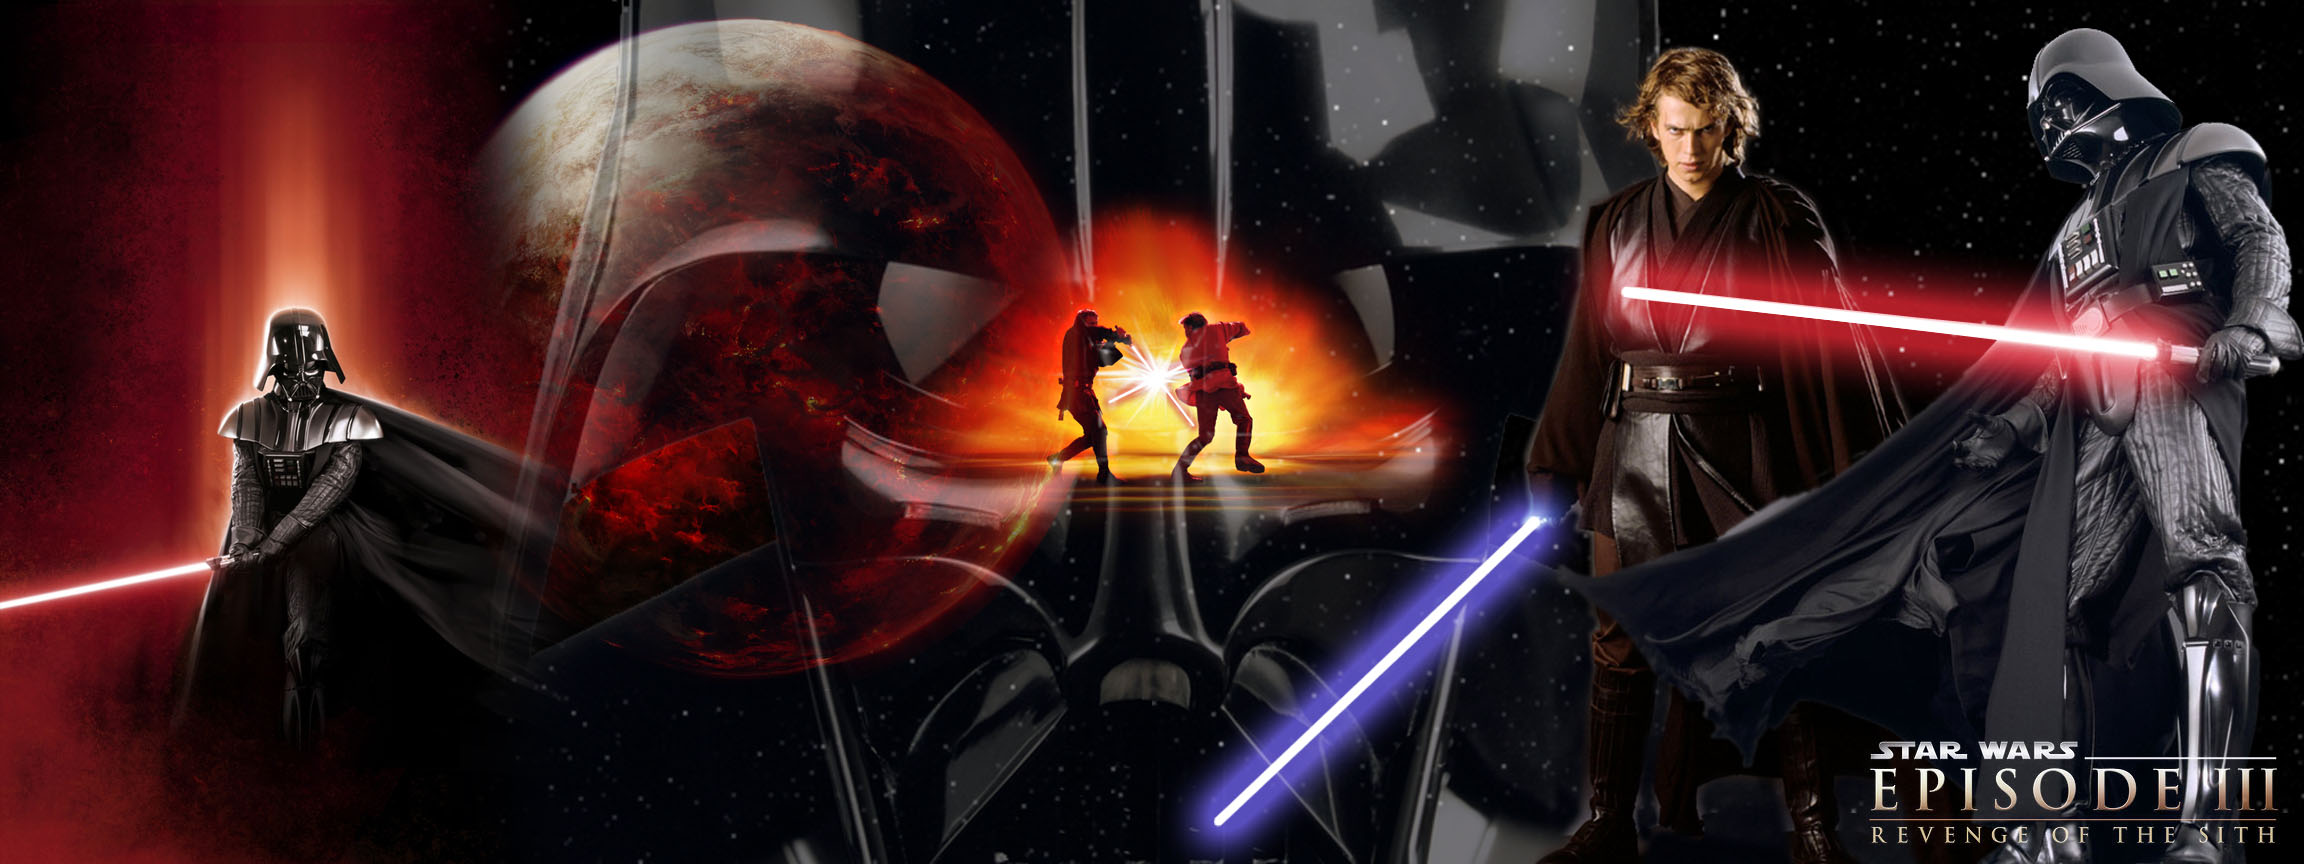 Darth Vader, Anakin Skywalker, and Obi-Wan Kenobi engage in lightsaber duel on a dark background.